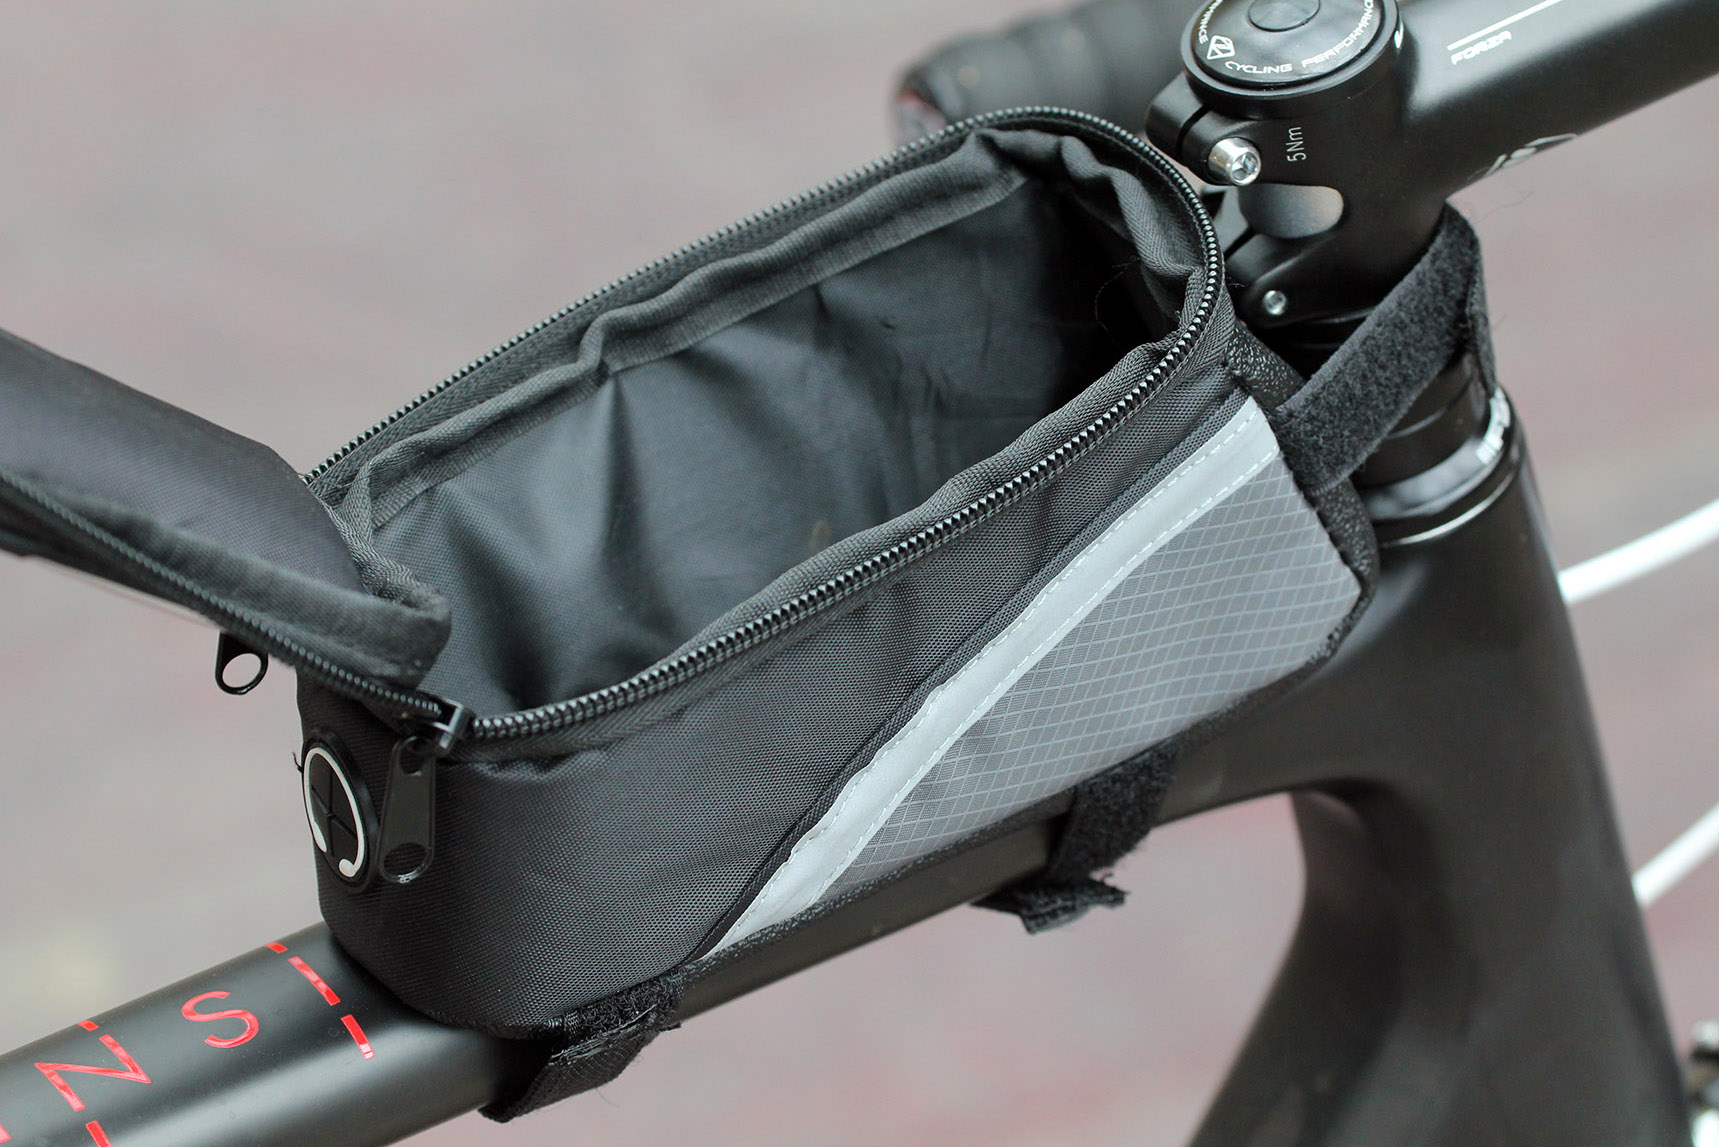 UK Waterproof MTB Mountain Bike Frame Front Bag Pannier Bike Mobile Phone Holder